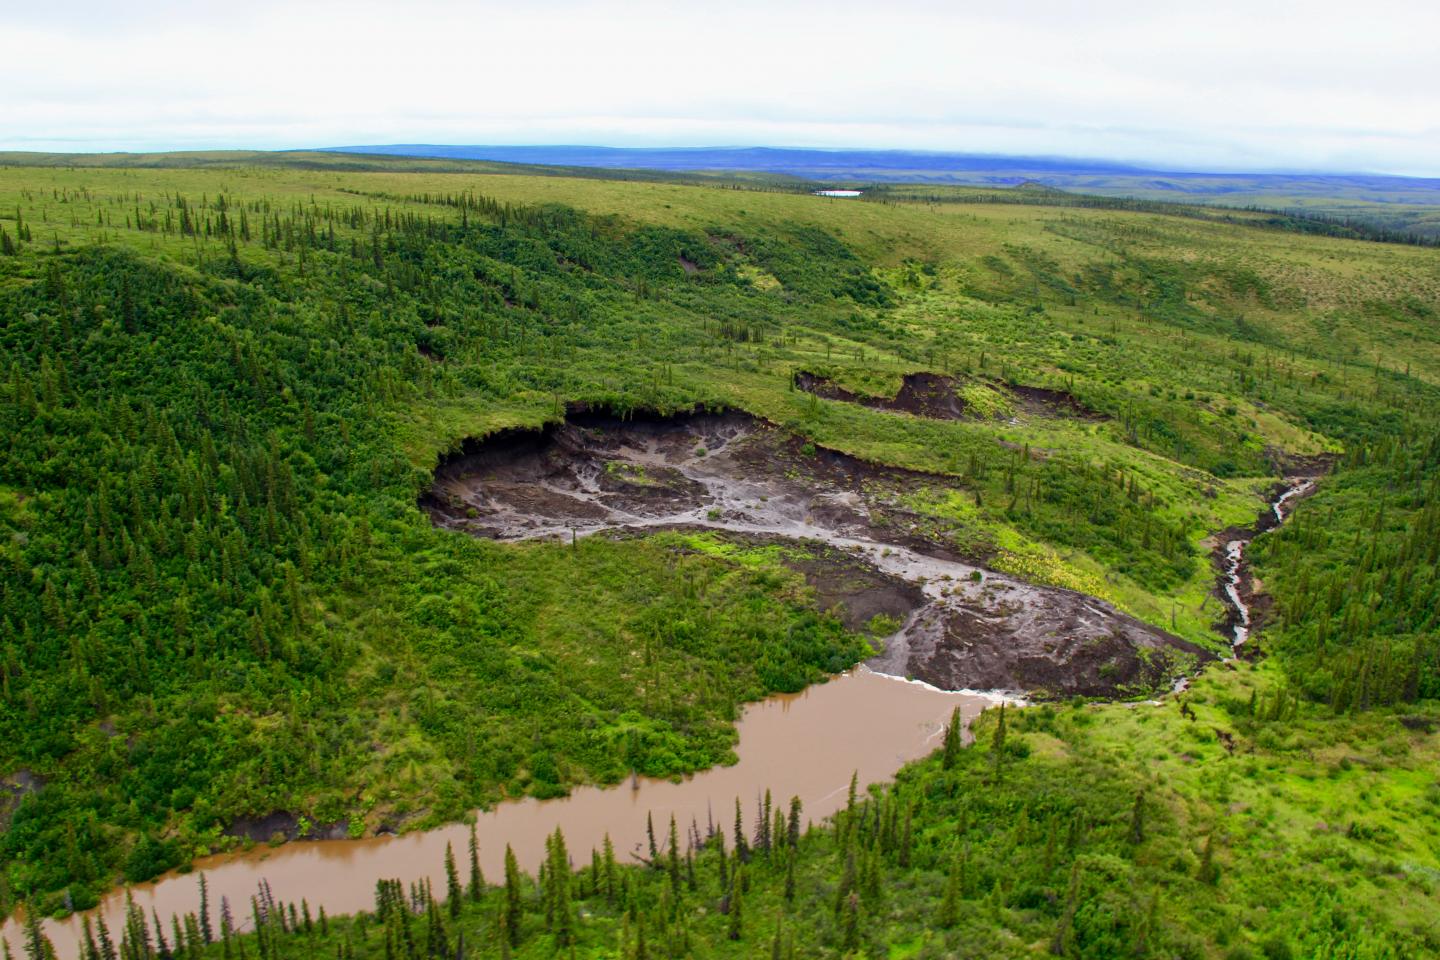 Peel Plateau in the Northwest Territories, Canada